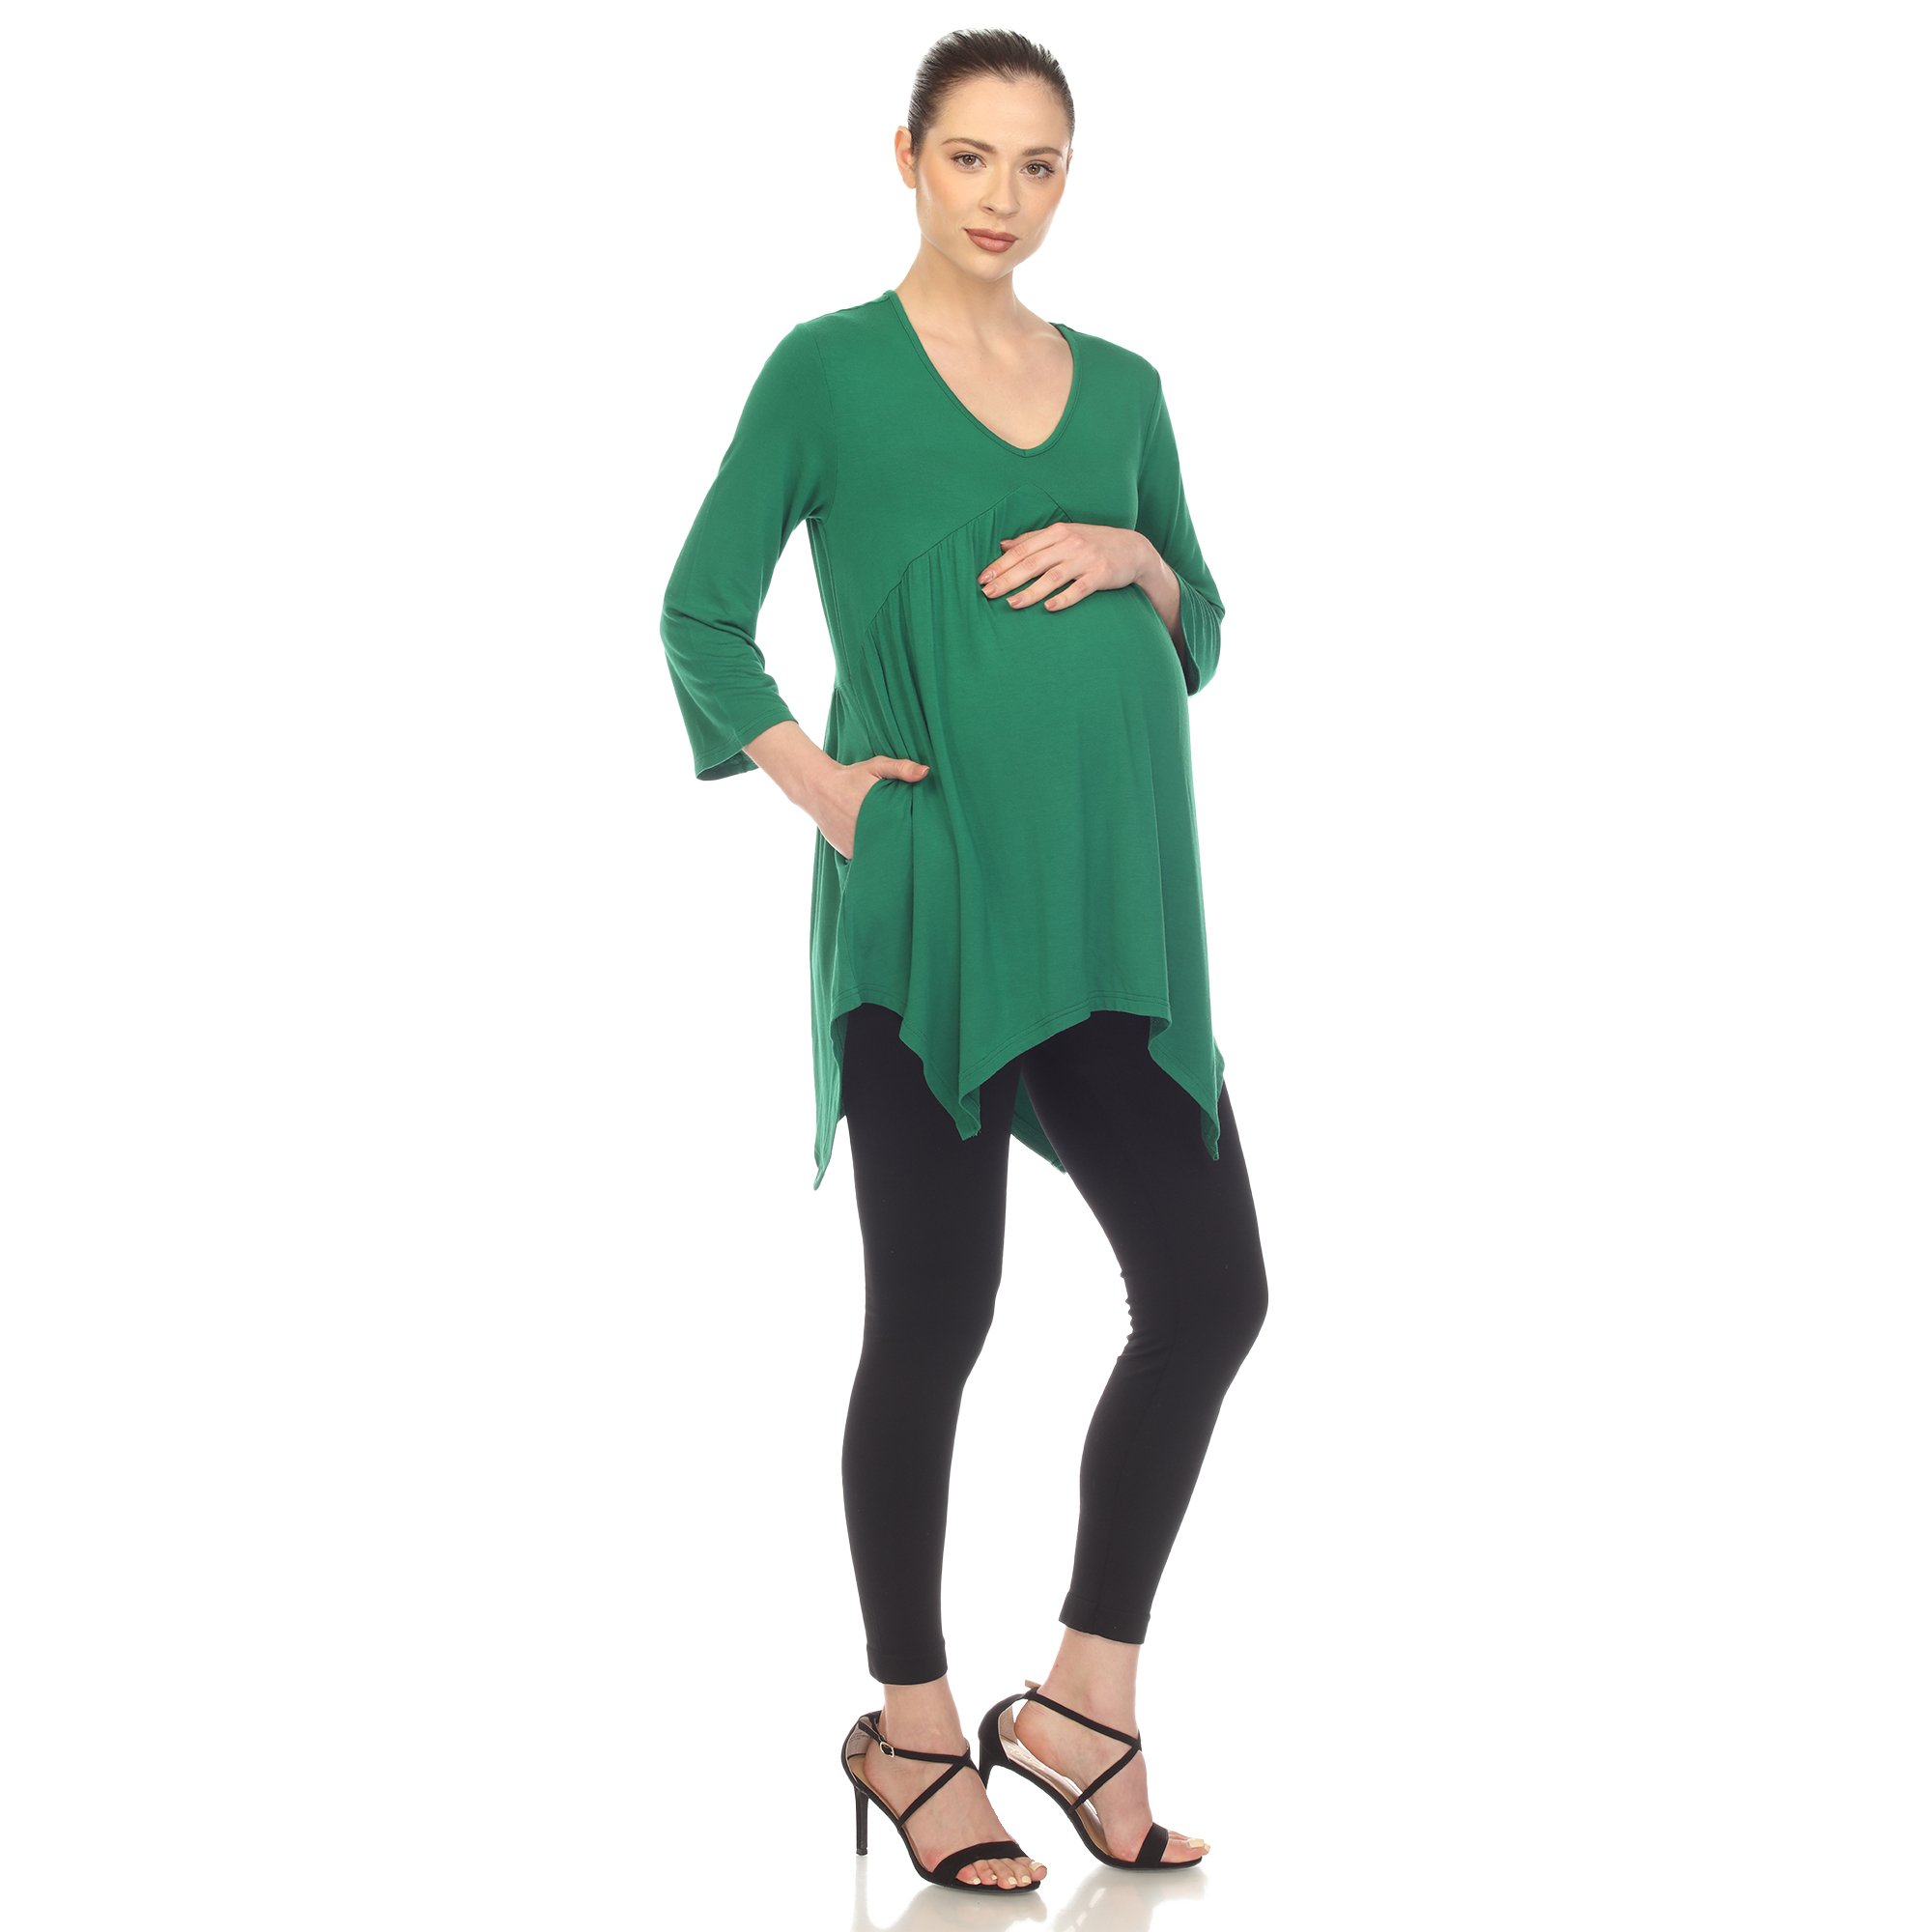 White Mark Women's Maternity Empire Waist V-Neck Tunic Top - Green, 3X